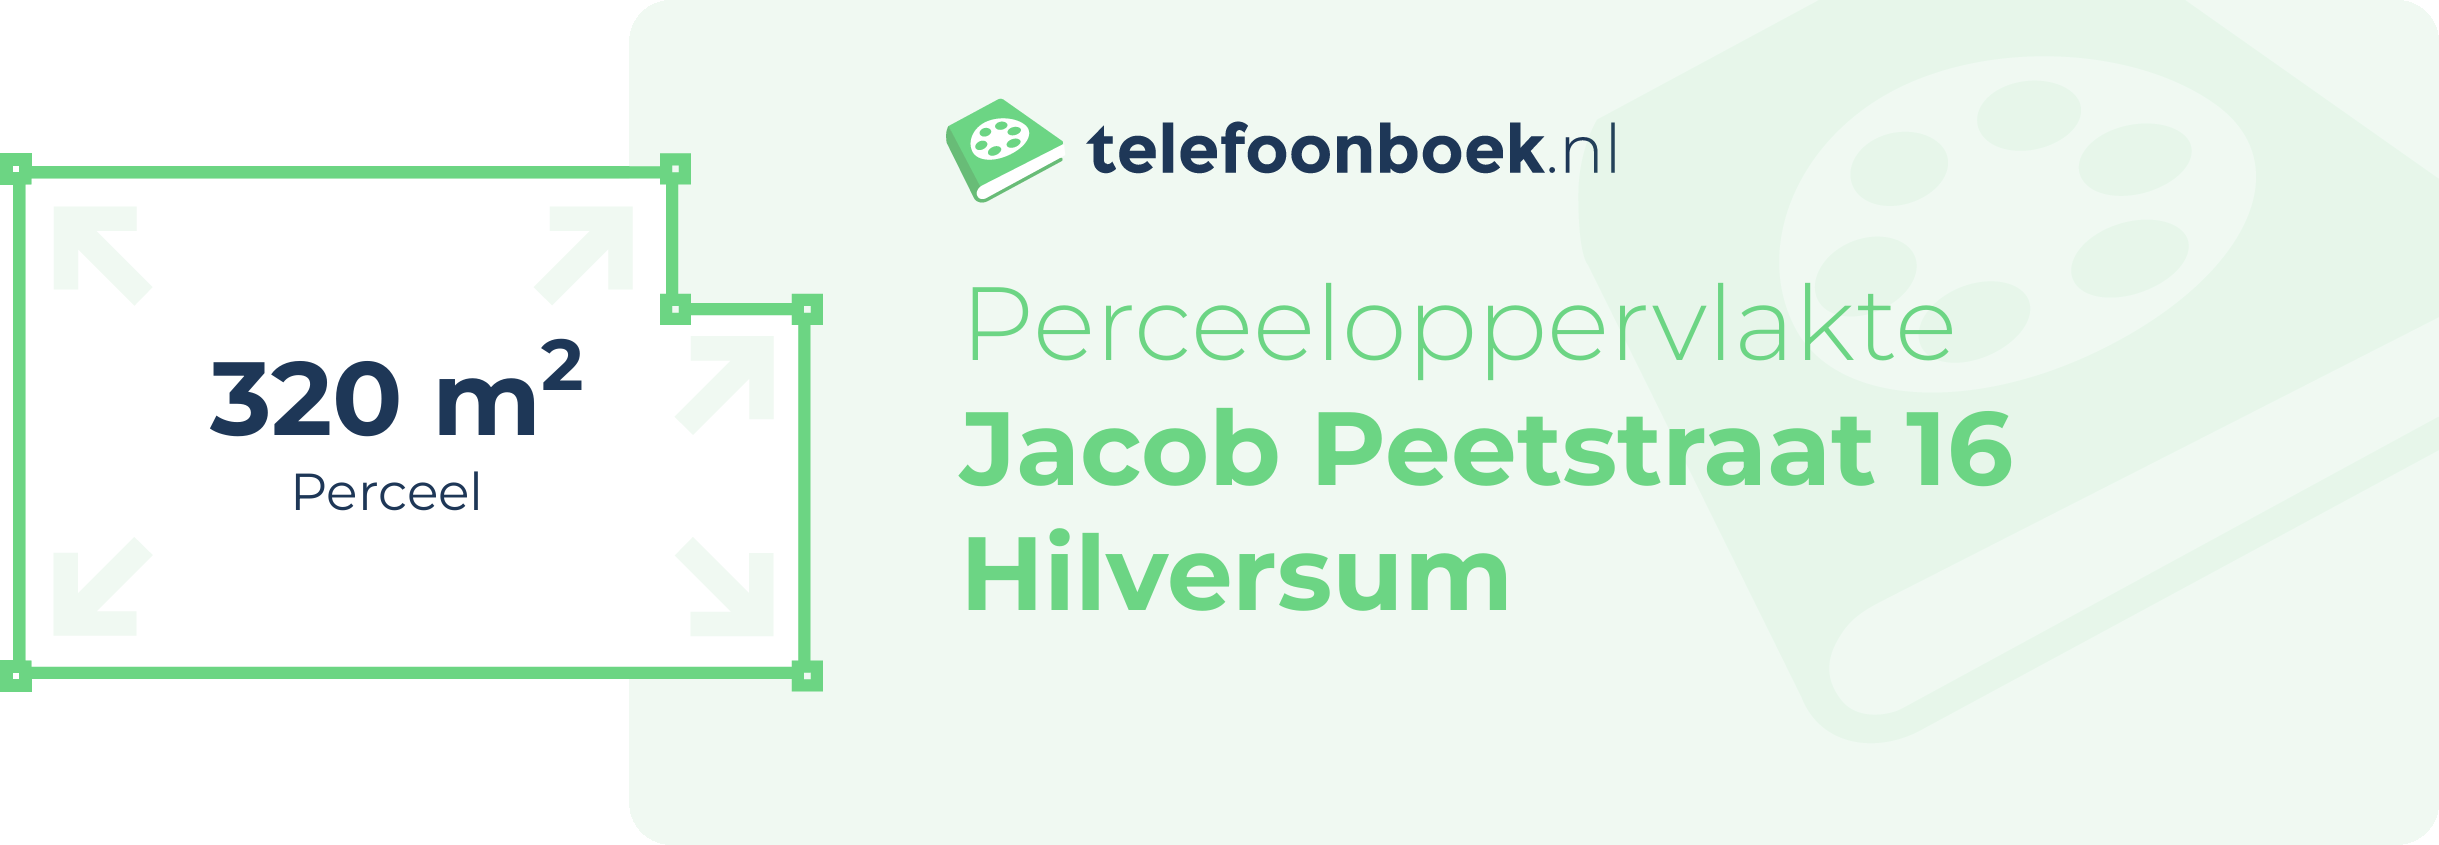 Perceeloppervlakte Jacob Peetstraat 16 Hilversum